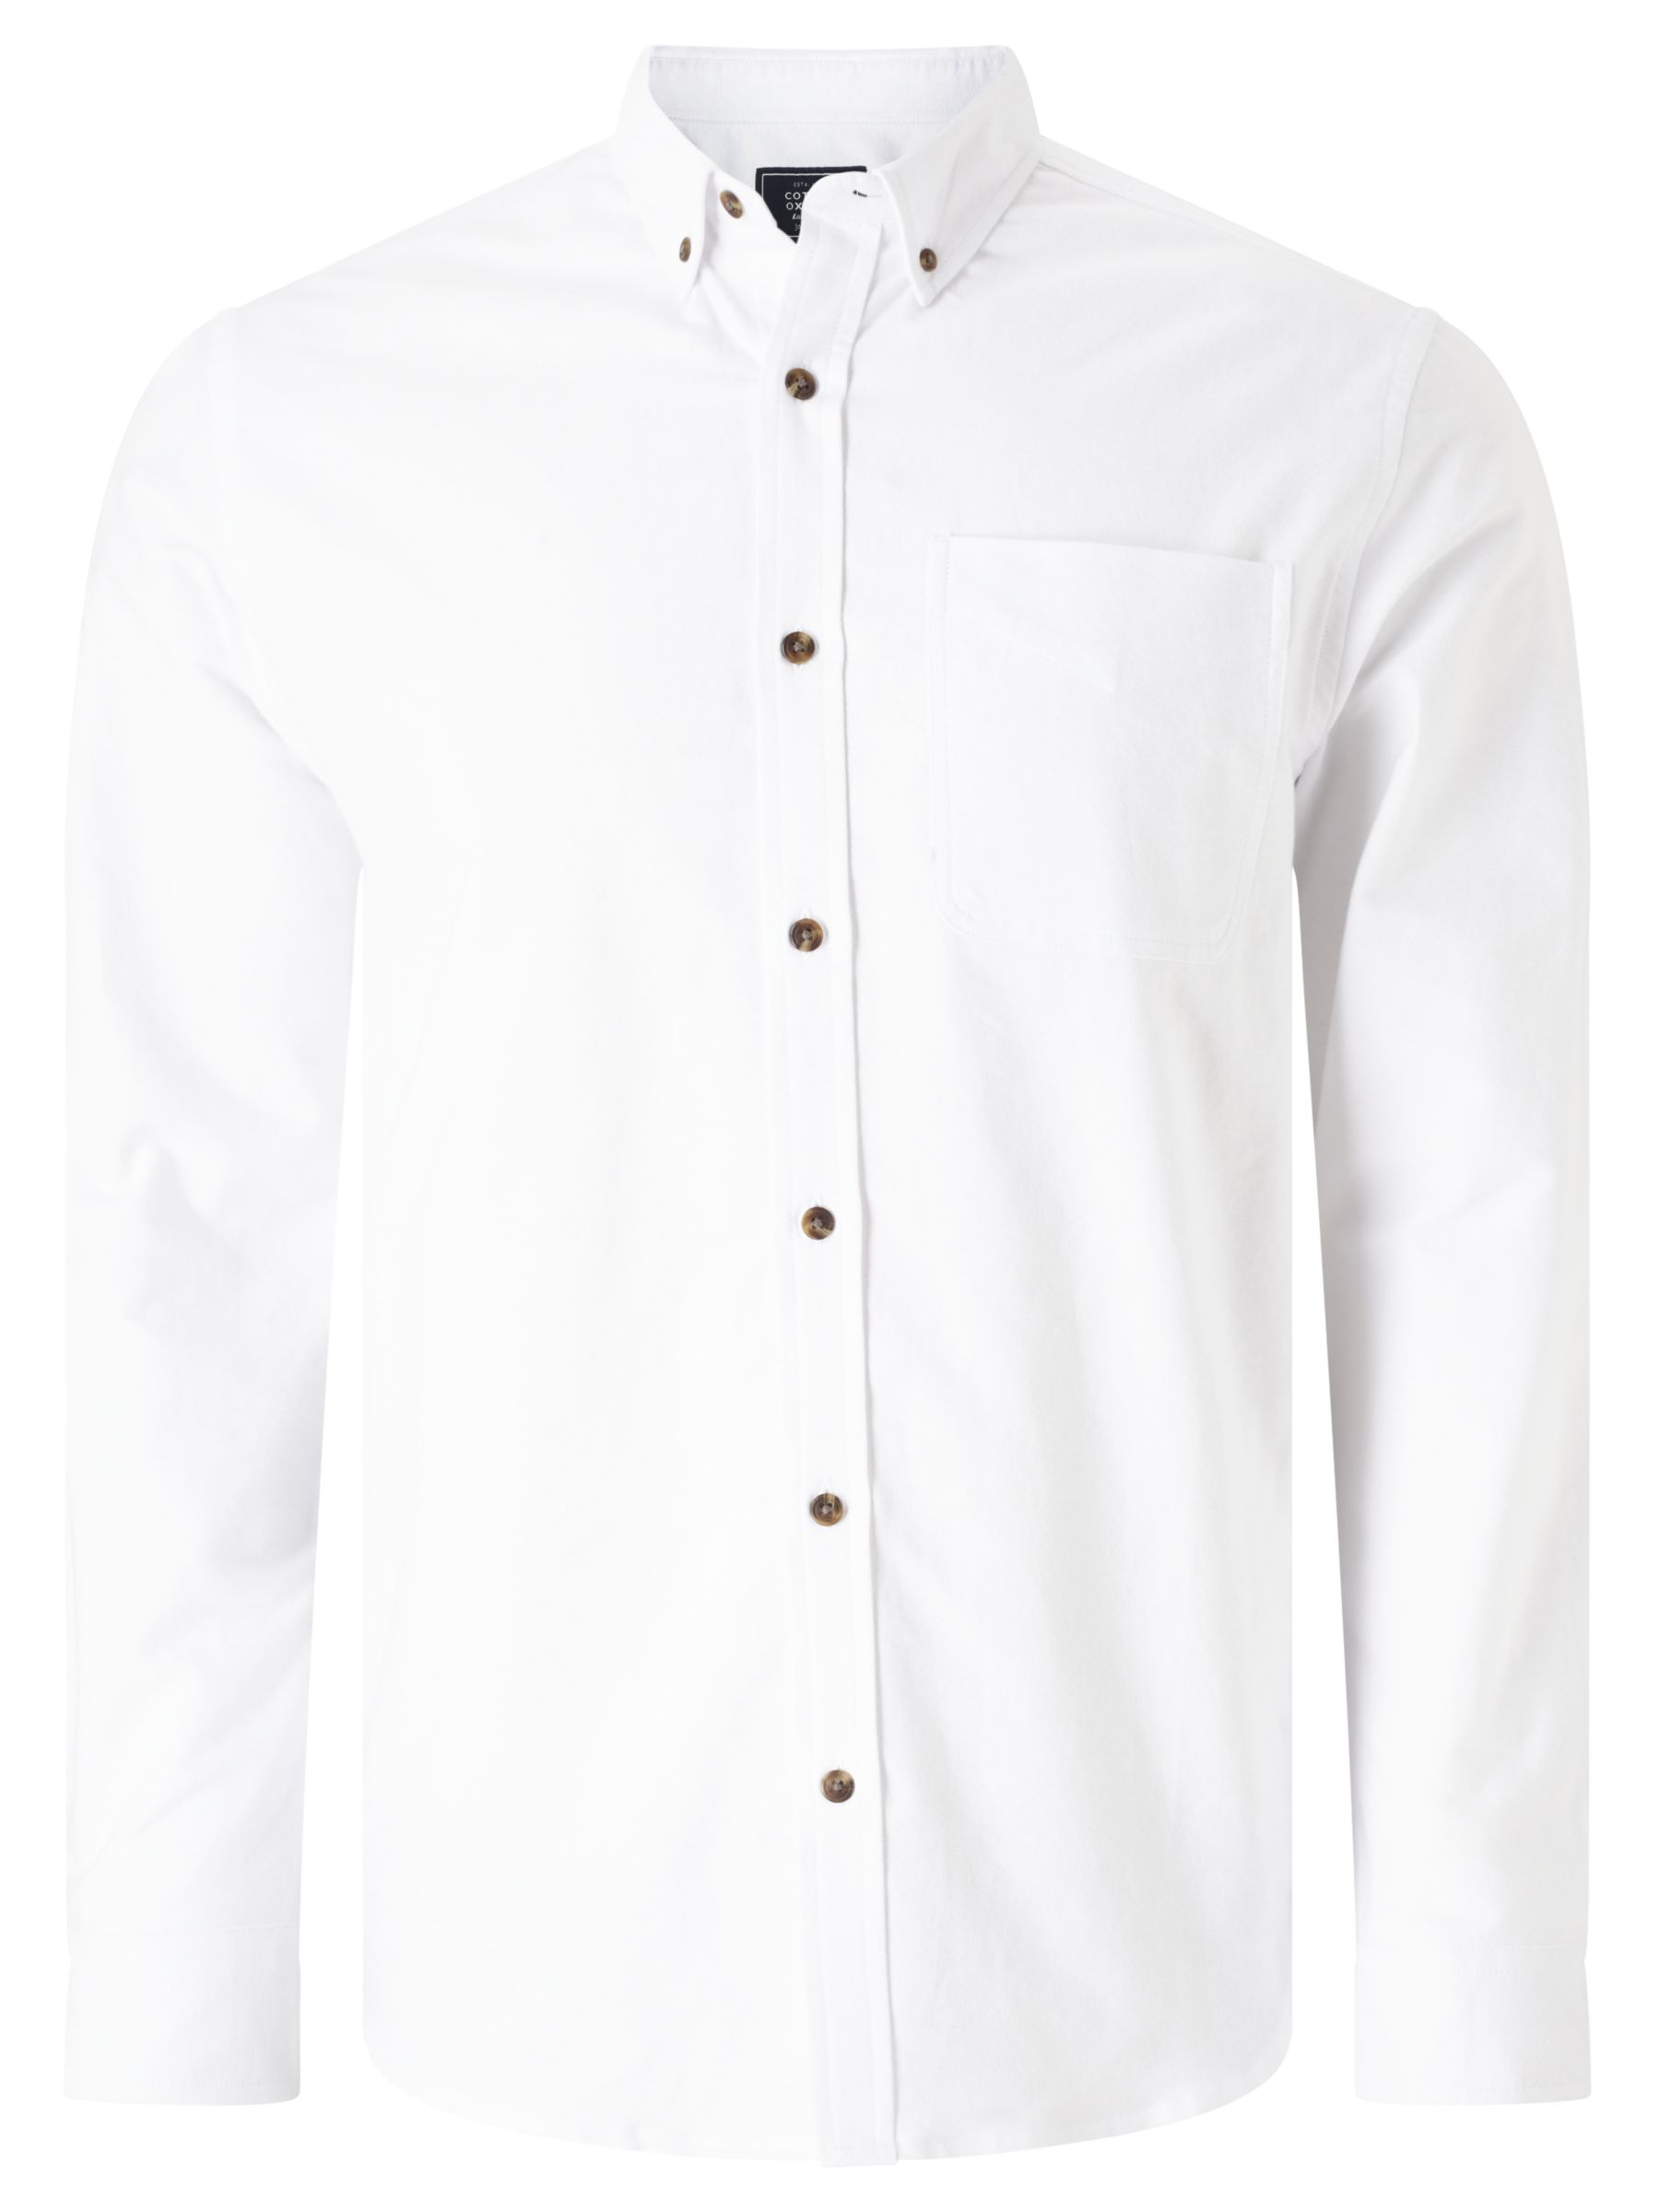 John Lewis & Partners Laundered Cotton Oxford Shirt, White